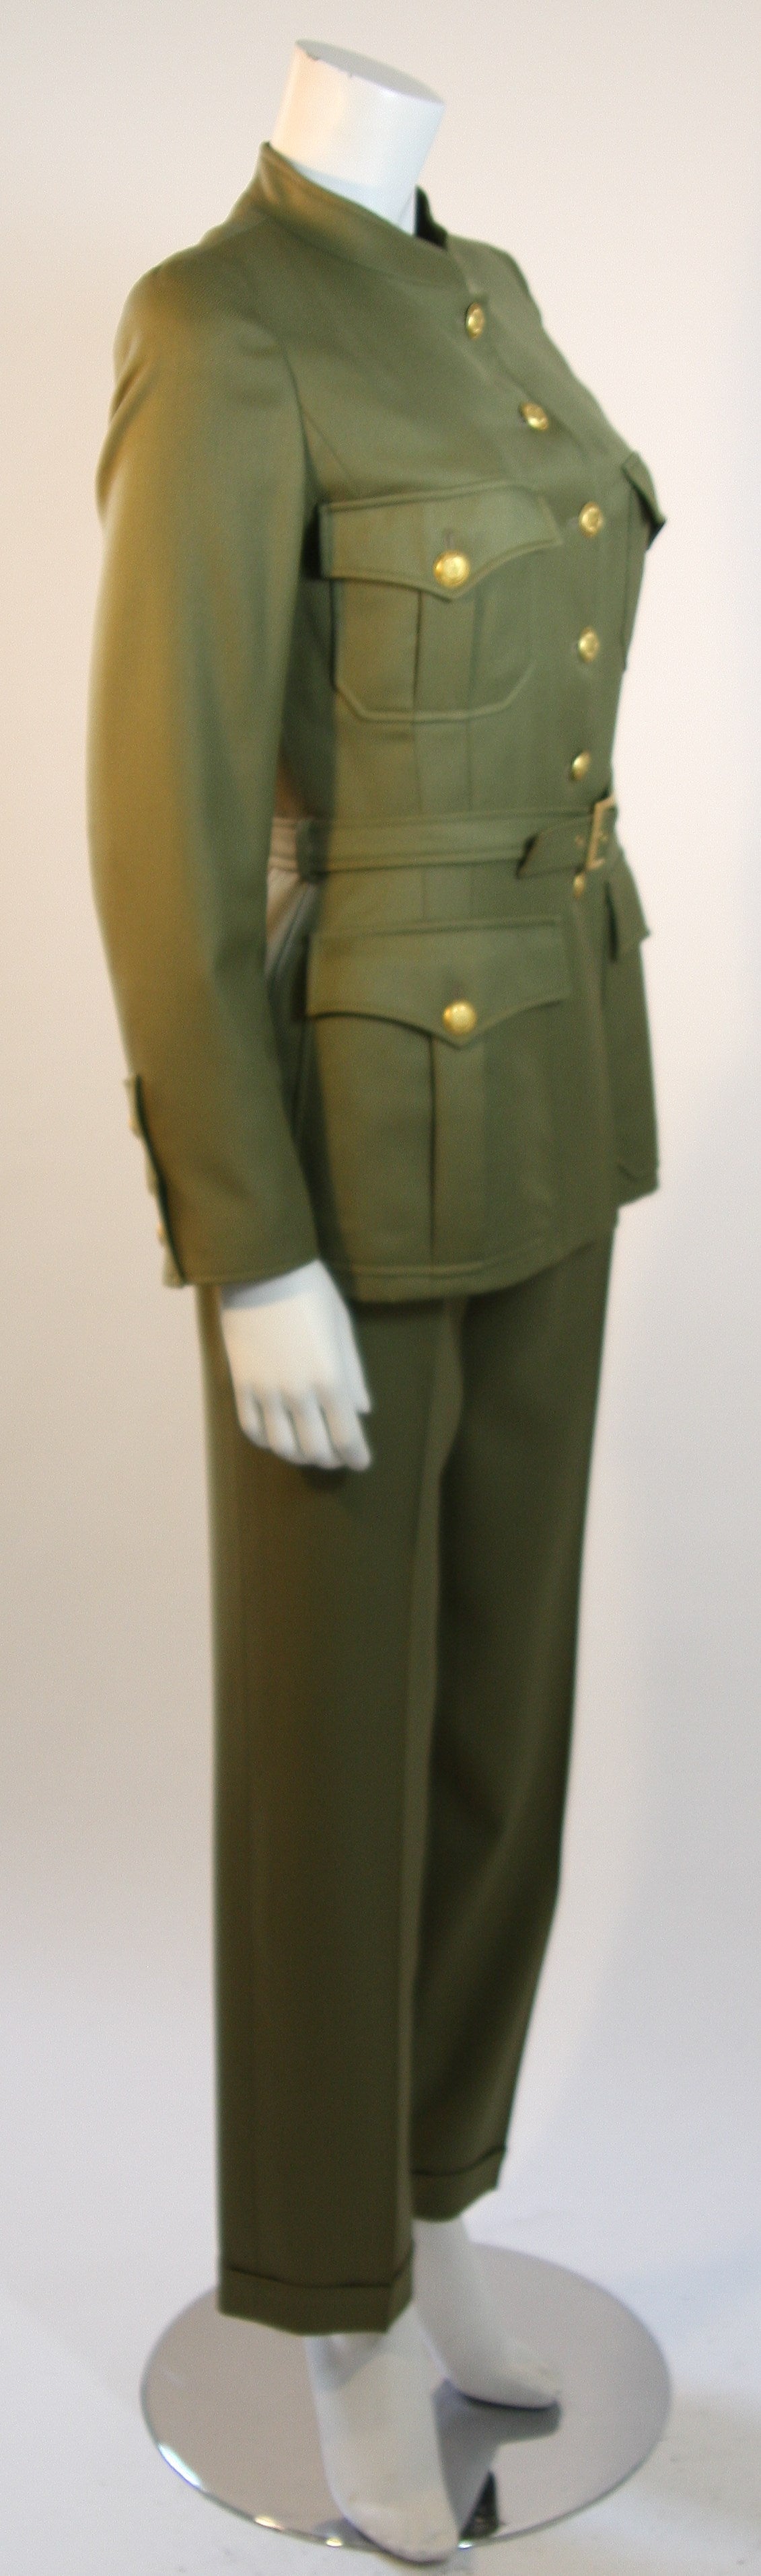 chanel military uniforms